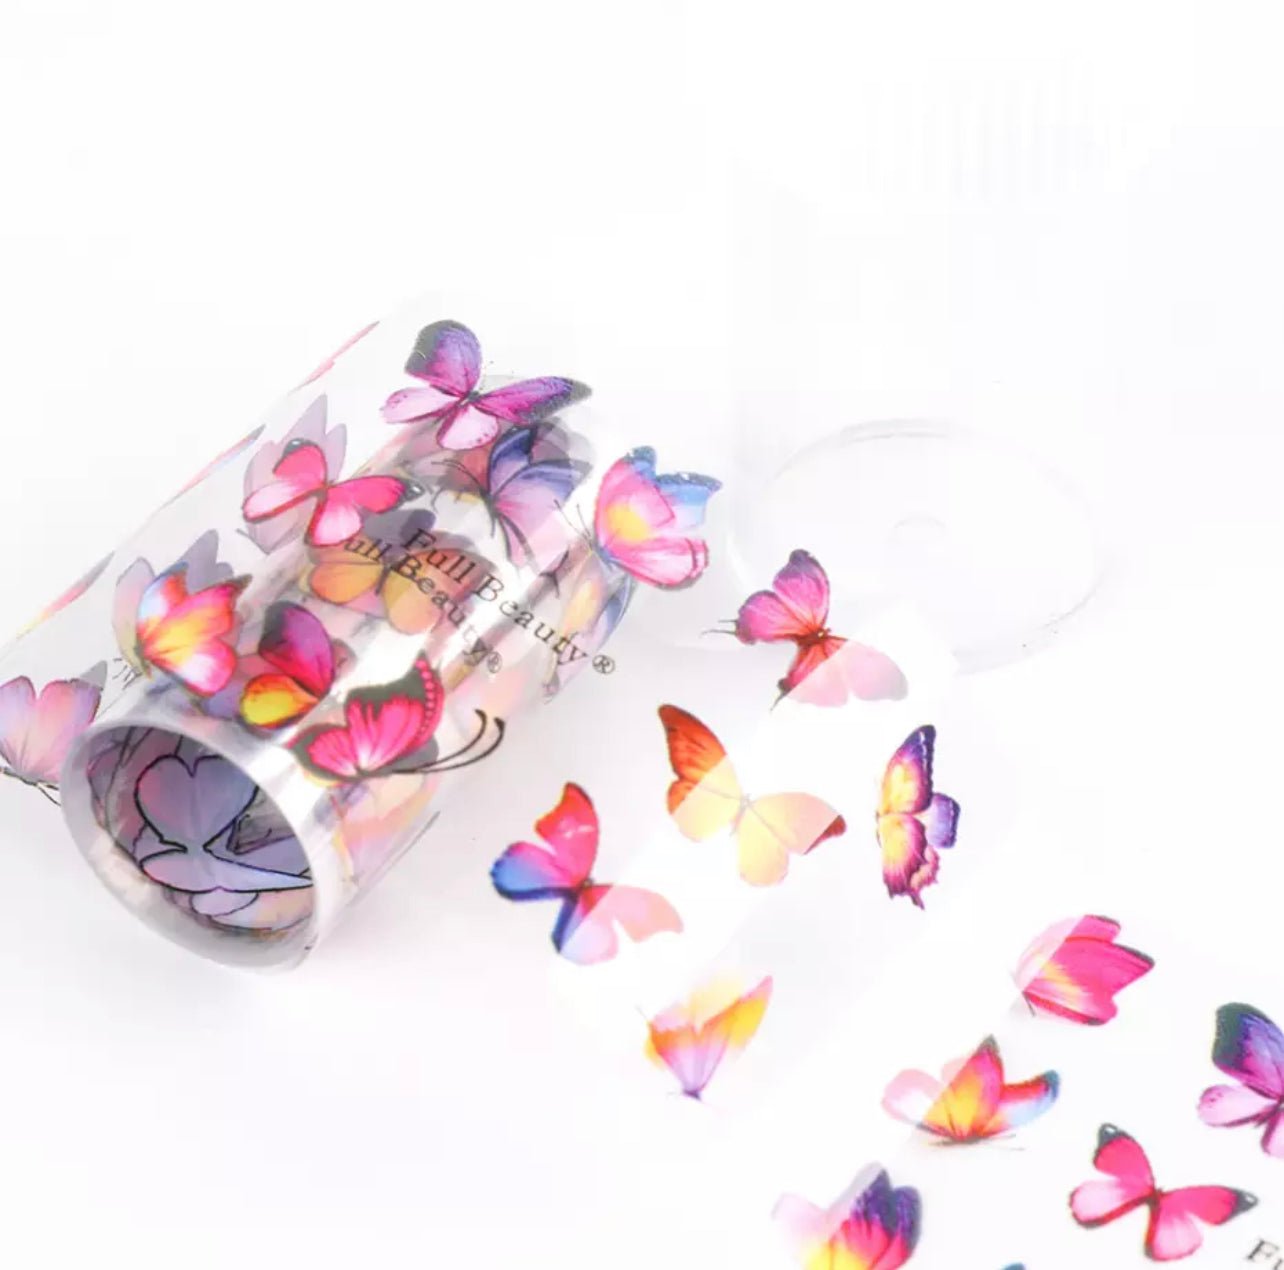 Transferfolie Butterfly Violet Mix 1 - Doriana Cosmetics GmbH